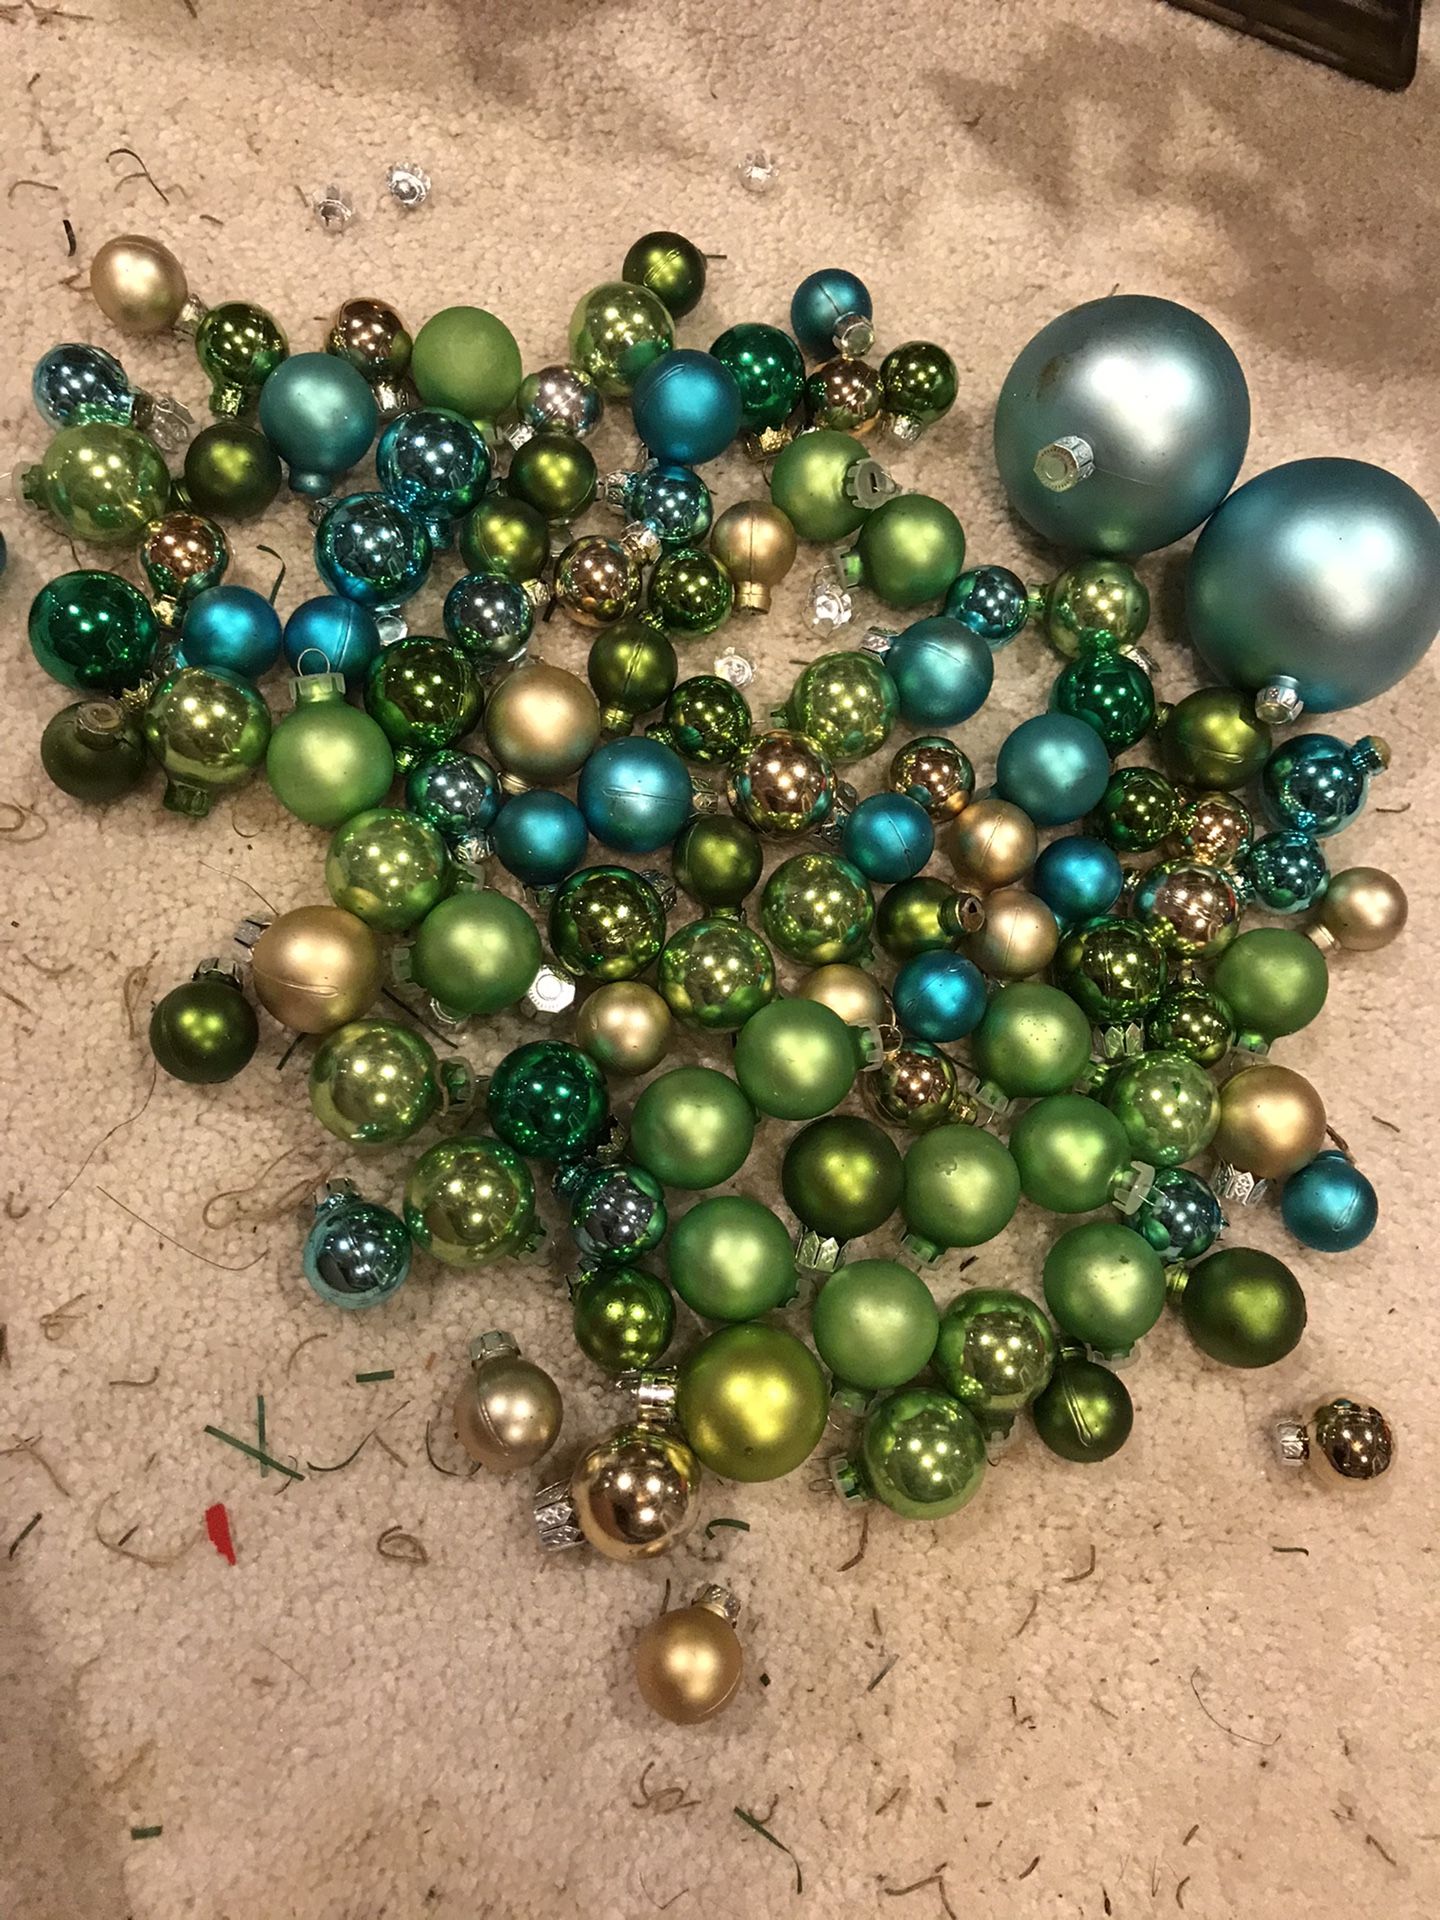 Teal and green mini decorative ornaments